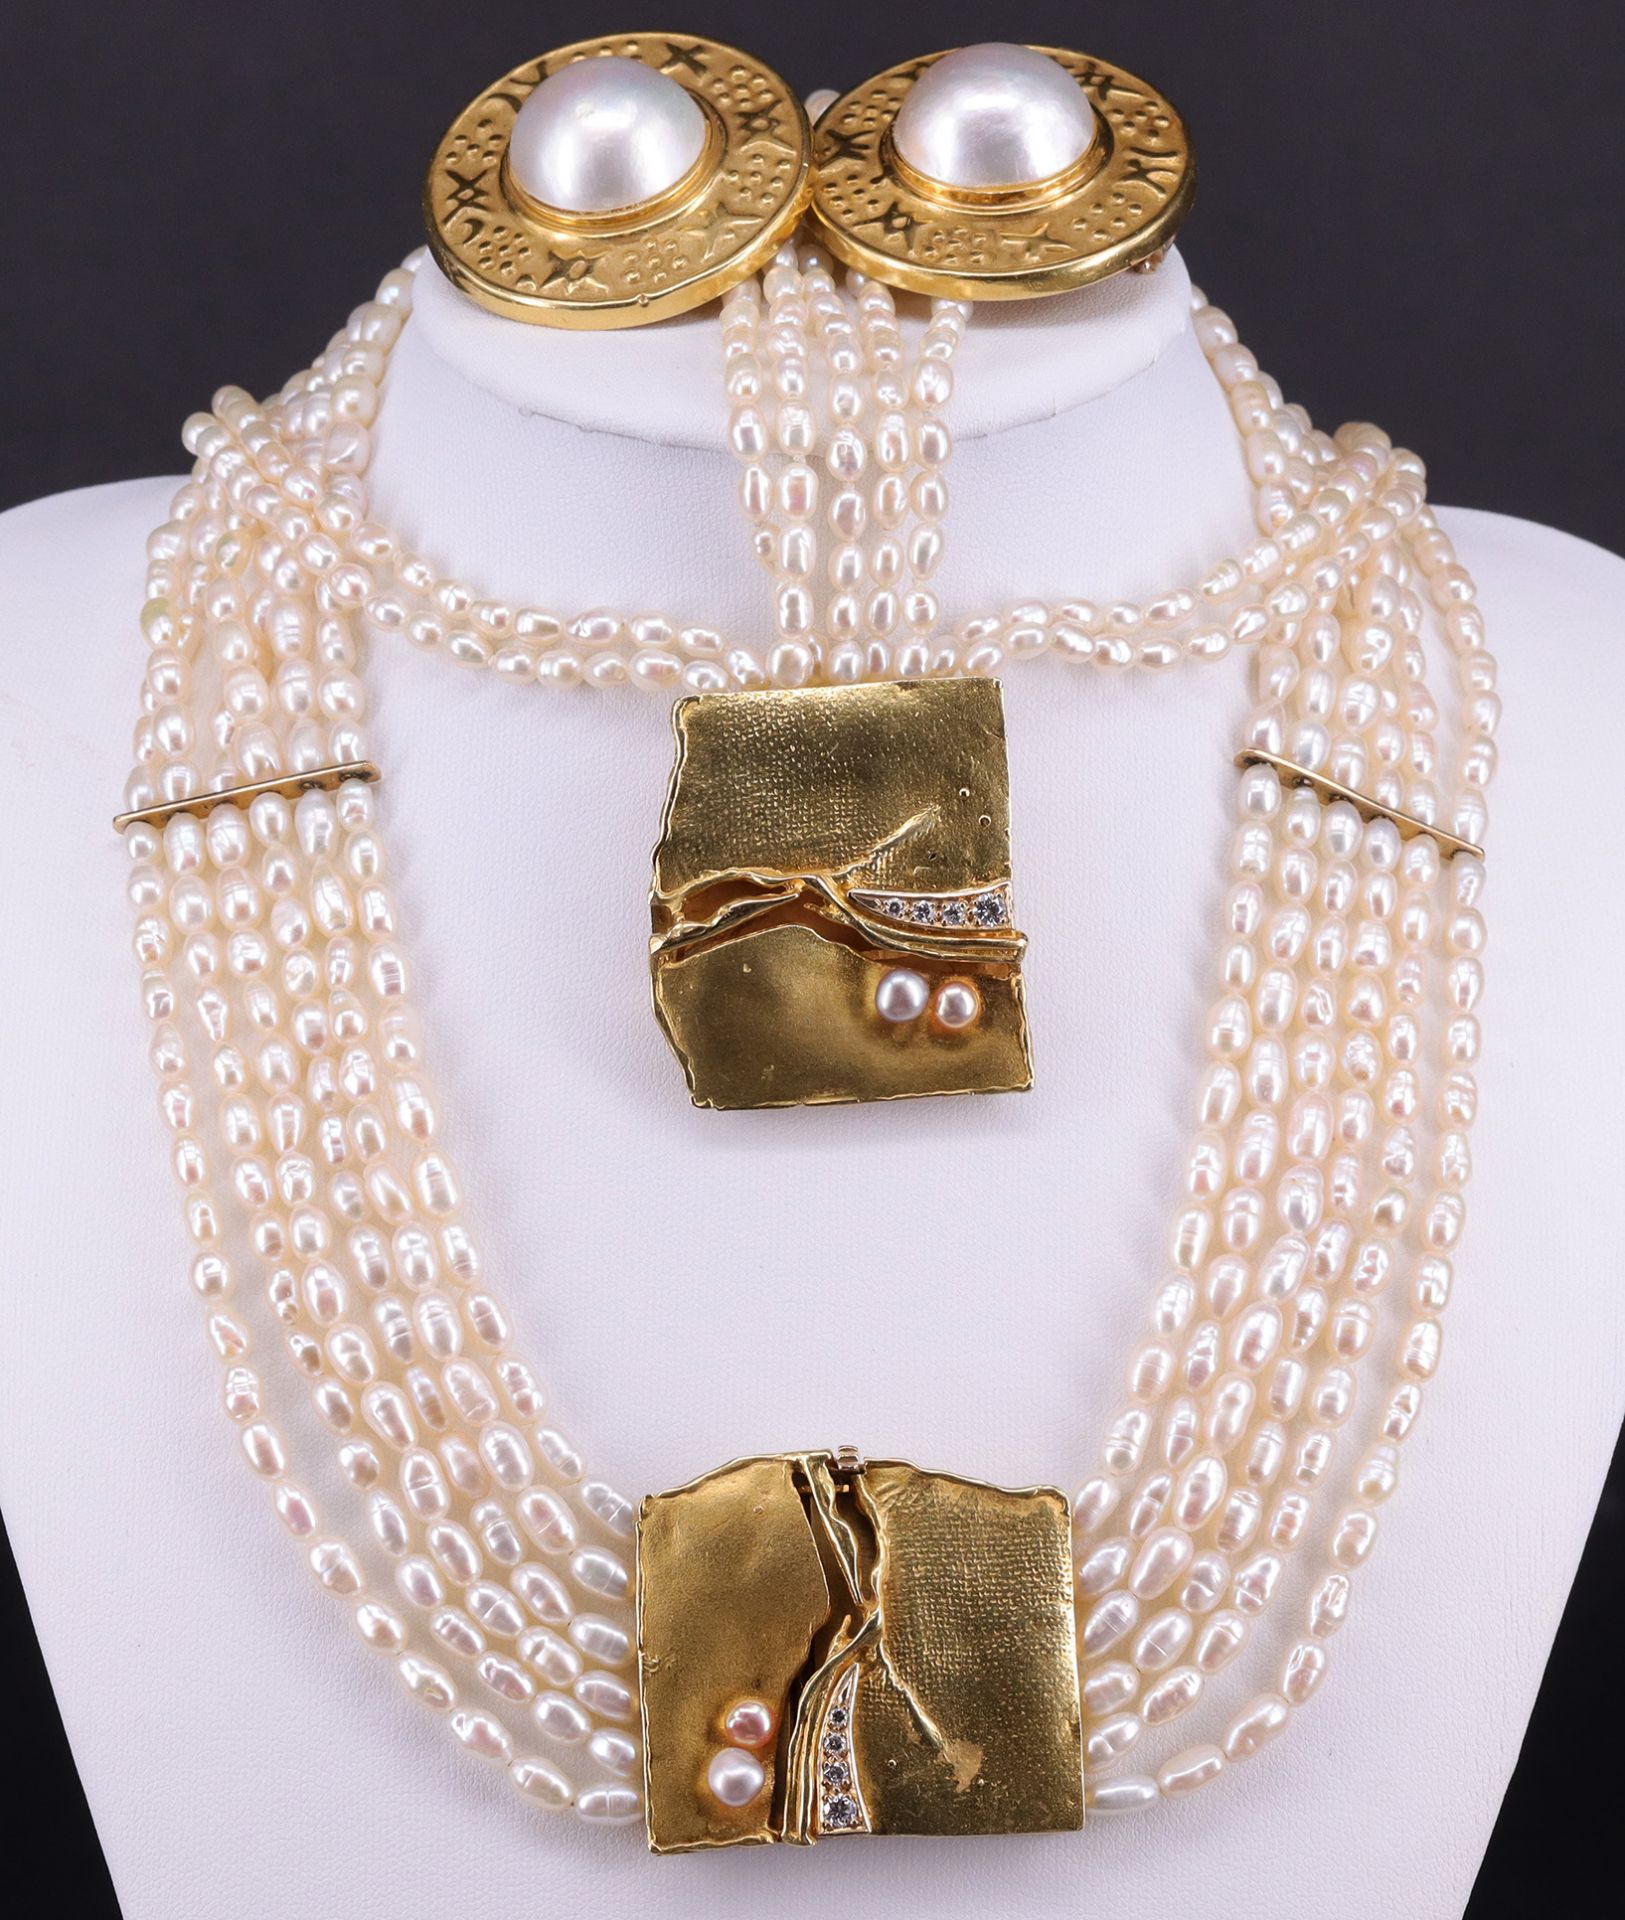 Collier, Armband und Ohrstecker / necklace, bracelet and earrings. 750er GG (teils geprüft), mit